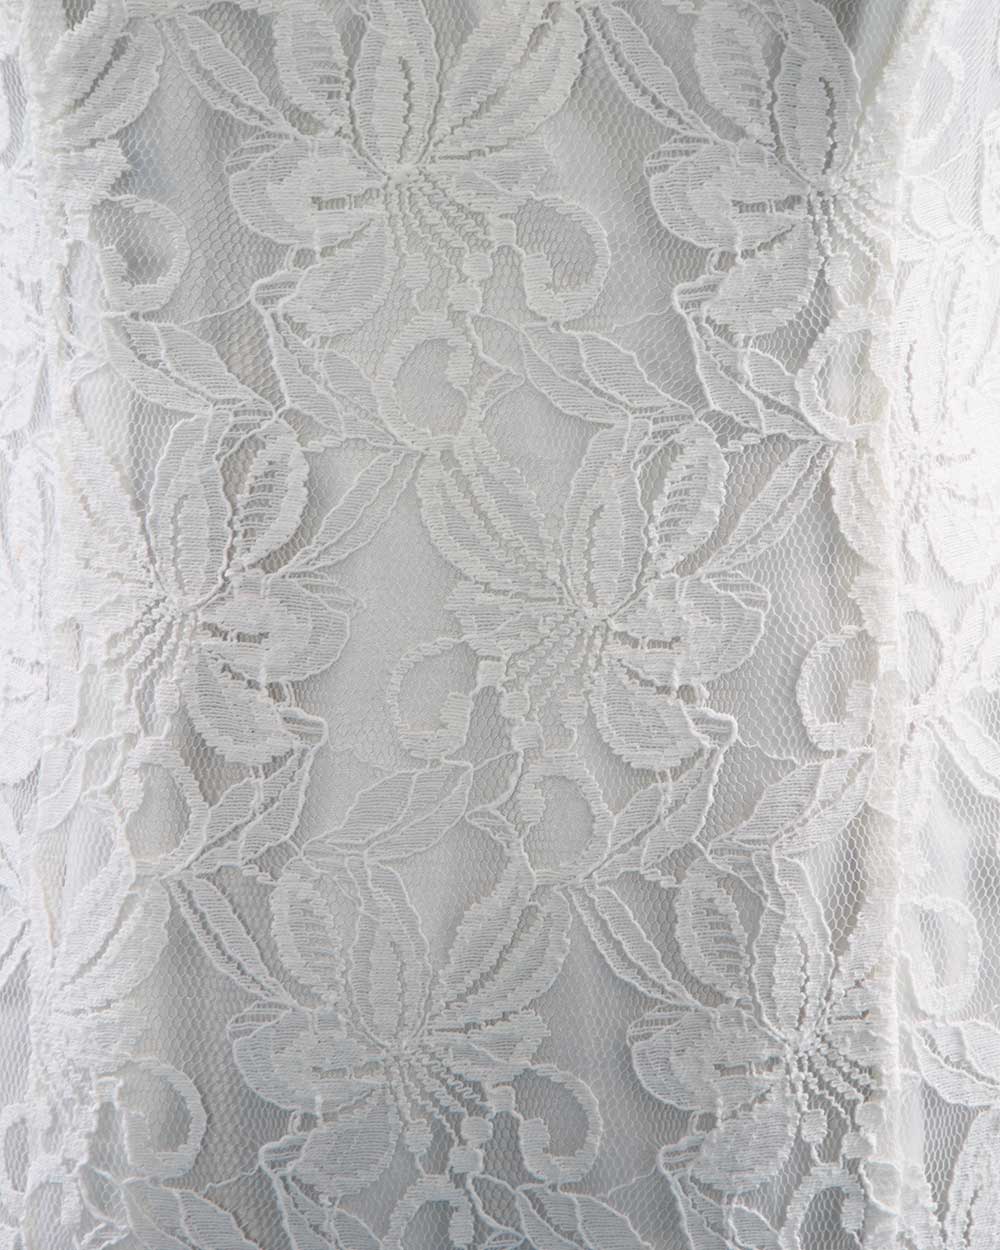 Debut Ivory Fishtail Wedding Dress Size 12